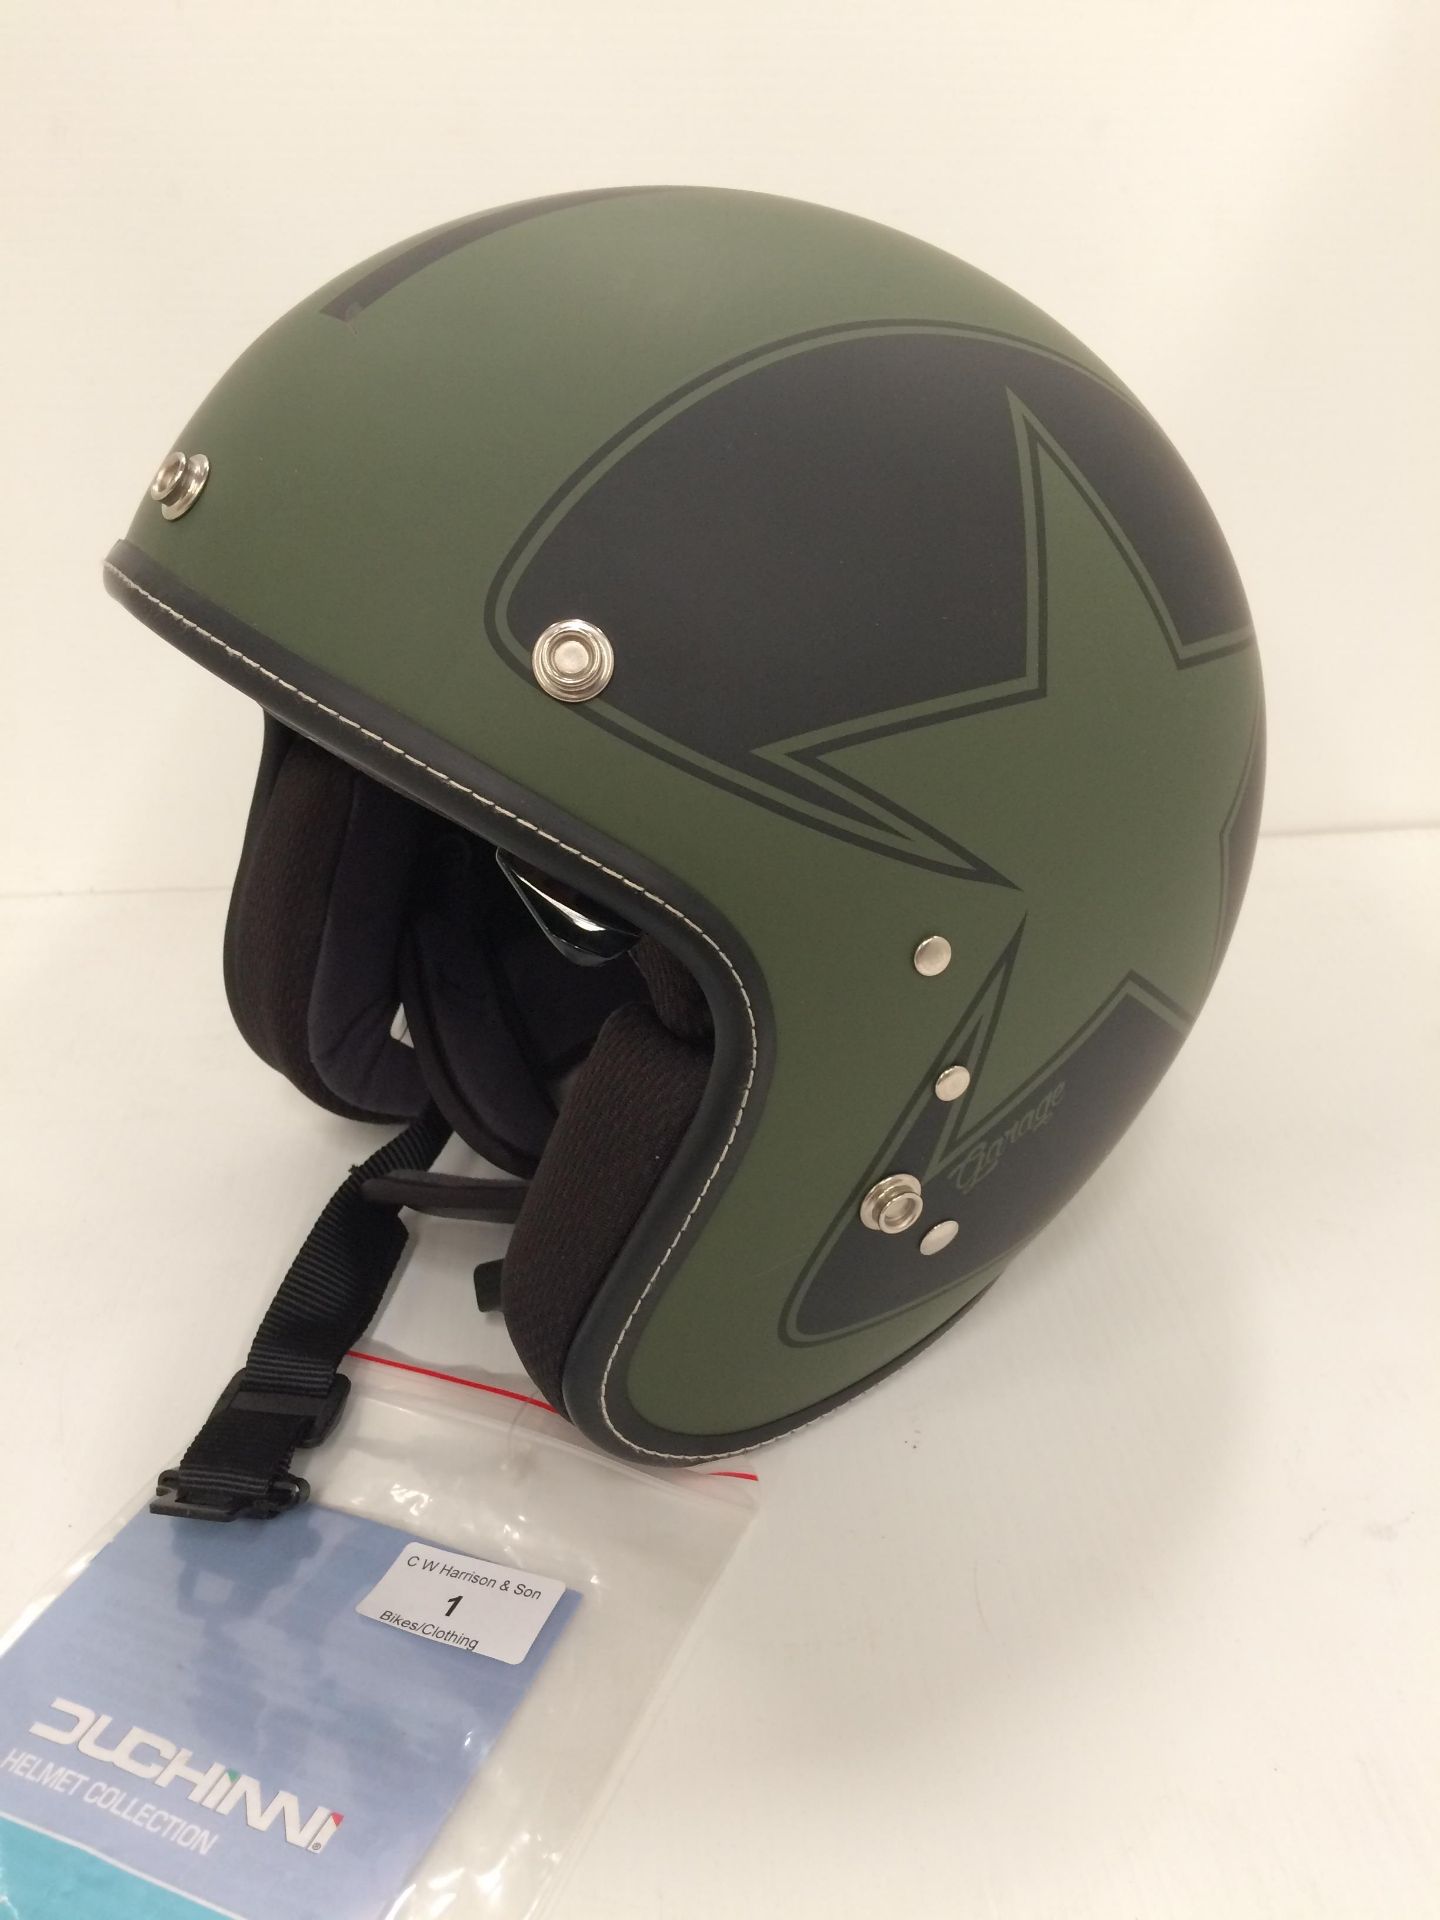 Duchinni 380F DS01/380F garage motorbike helmet in black and green - size S (55cm)